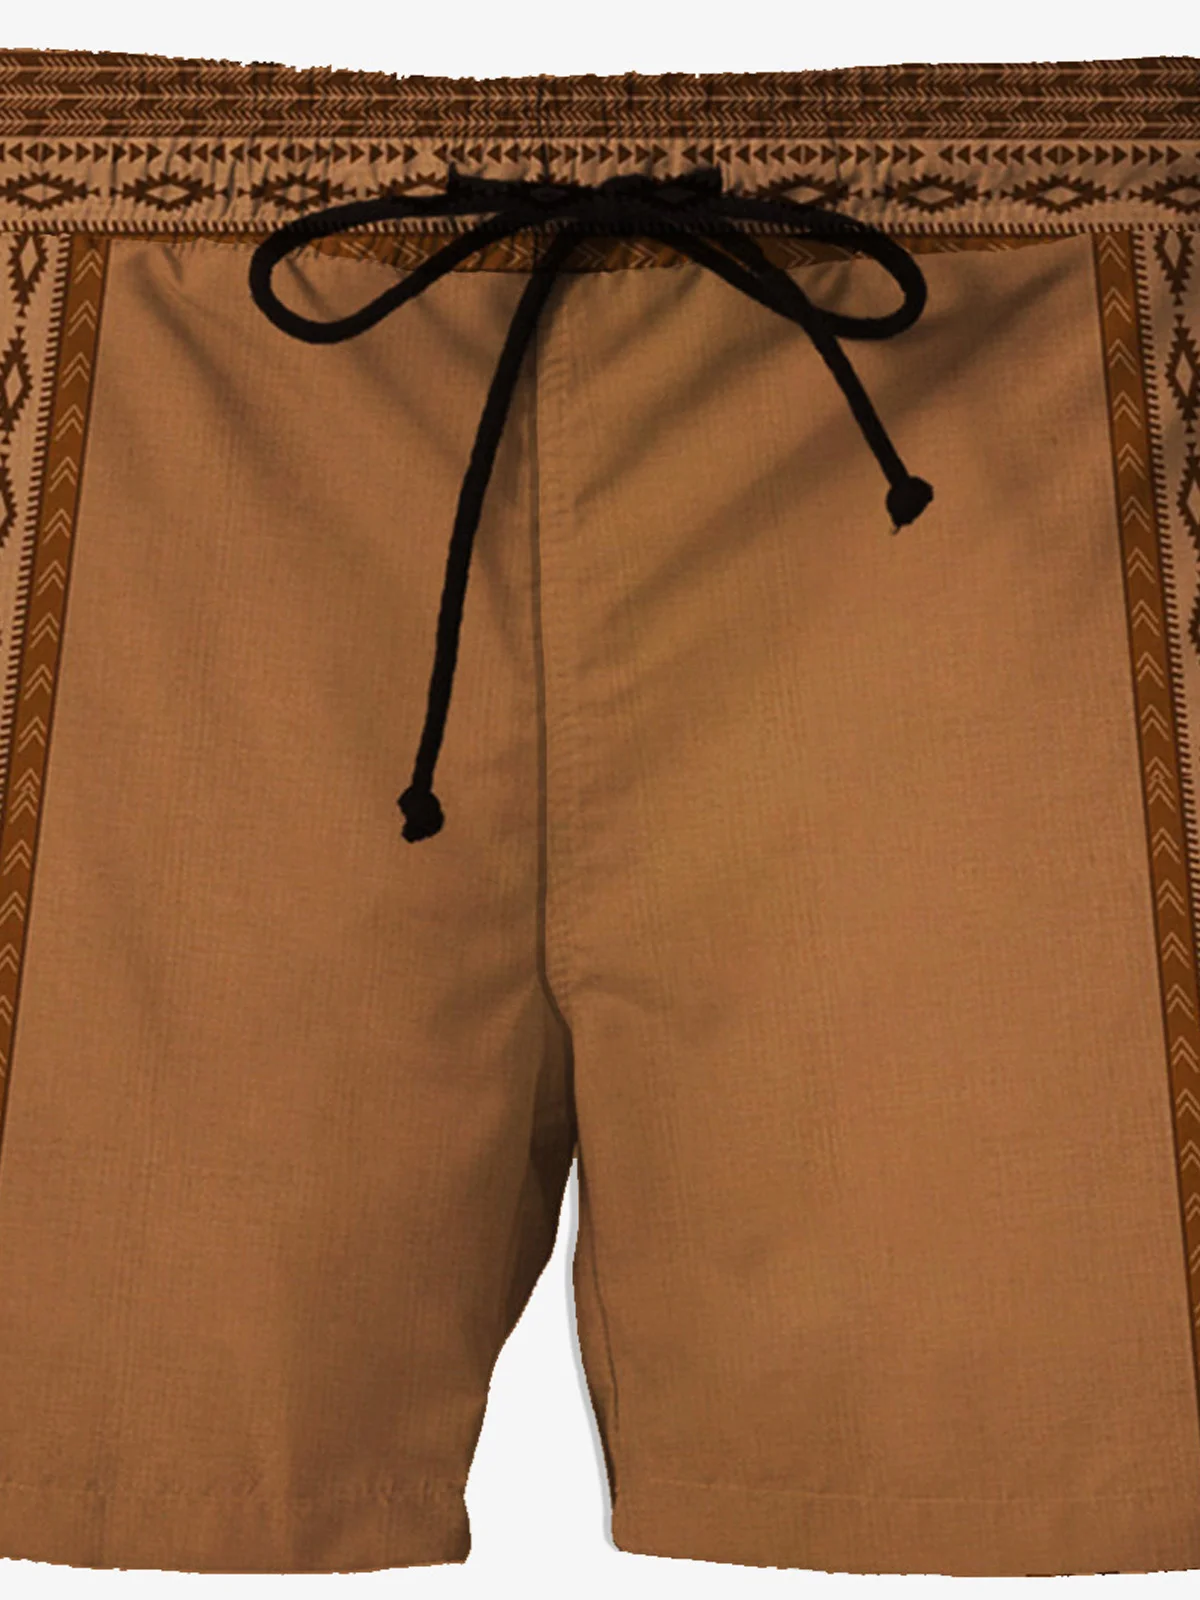 Royaura® Retro 50's Retro Guayaberas Shorts Ethnic Quick-Drying Beach Pants Swim Trunks Big Tall